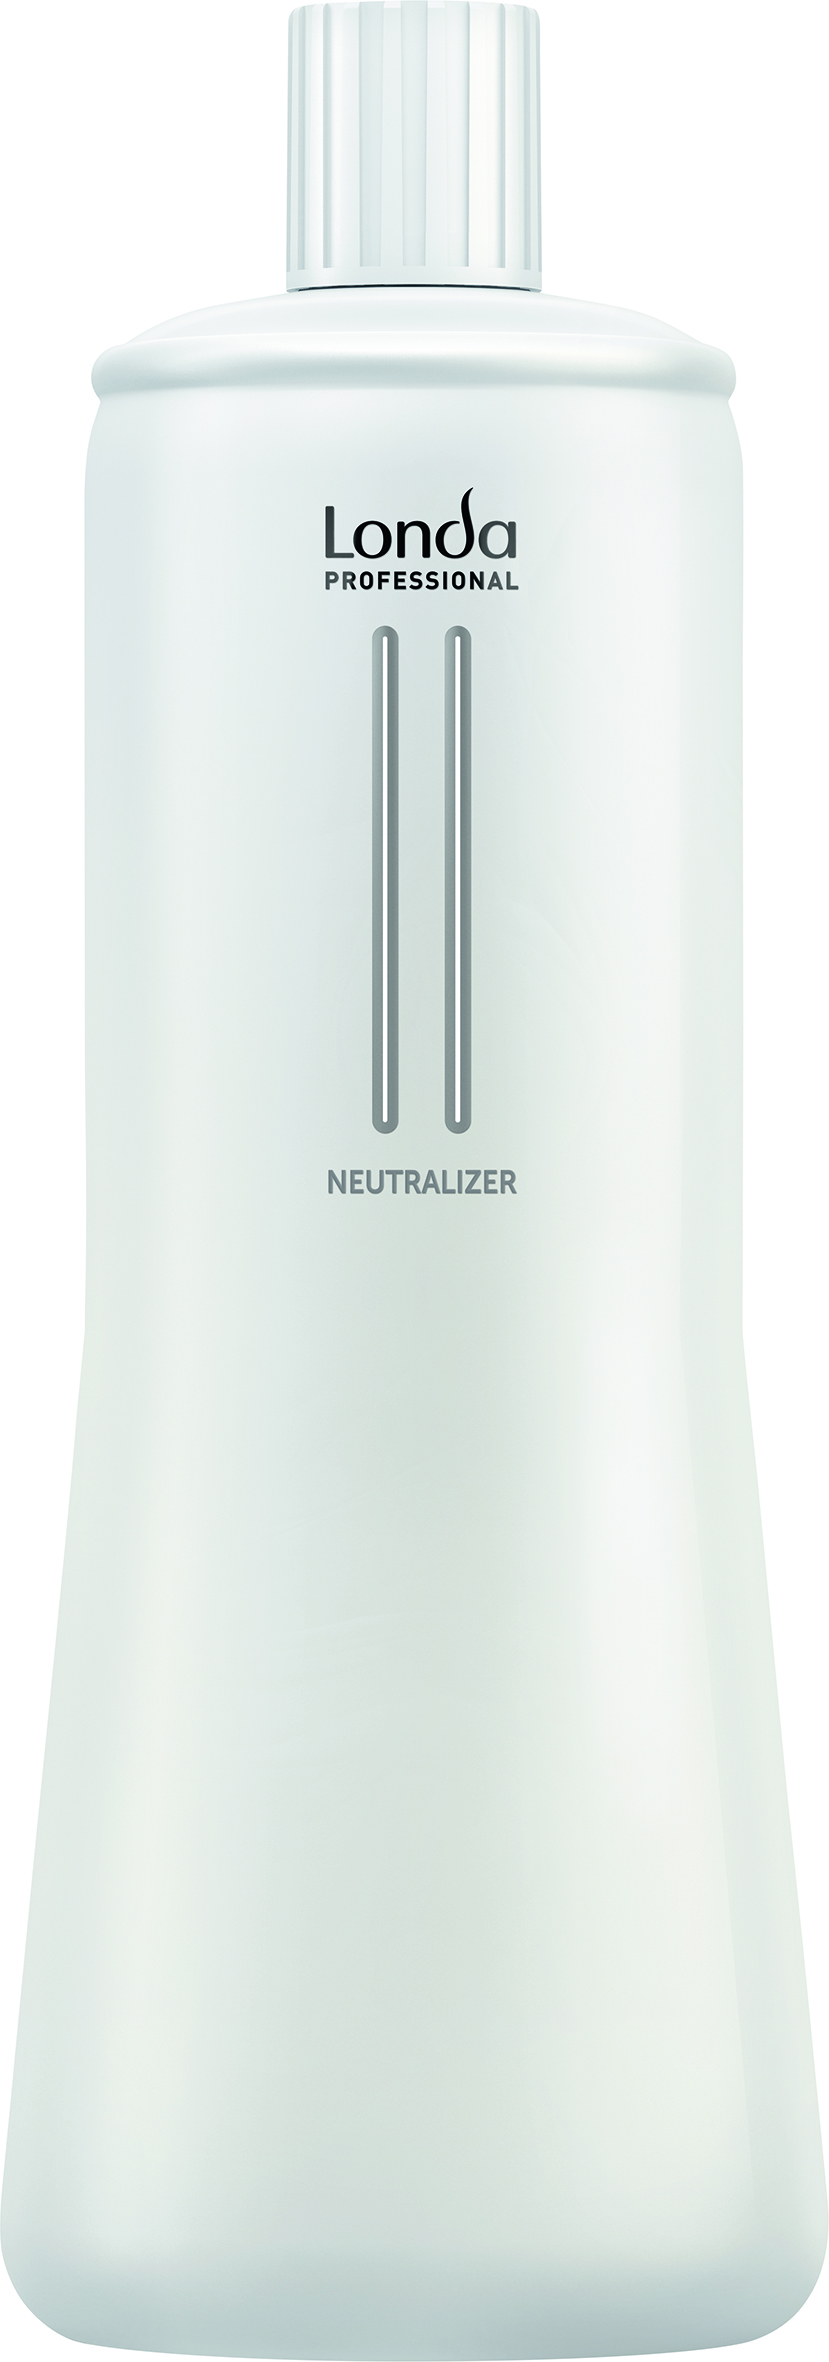 Londafix Neutralizer, 1000 ml